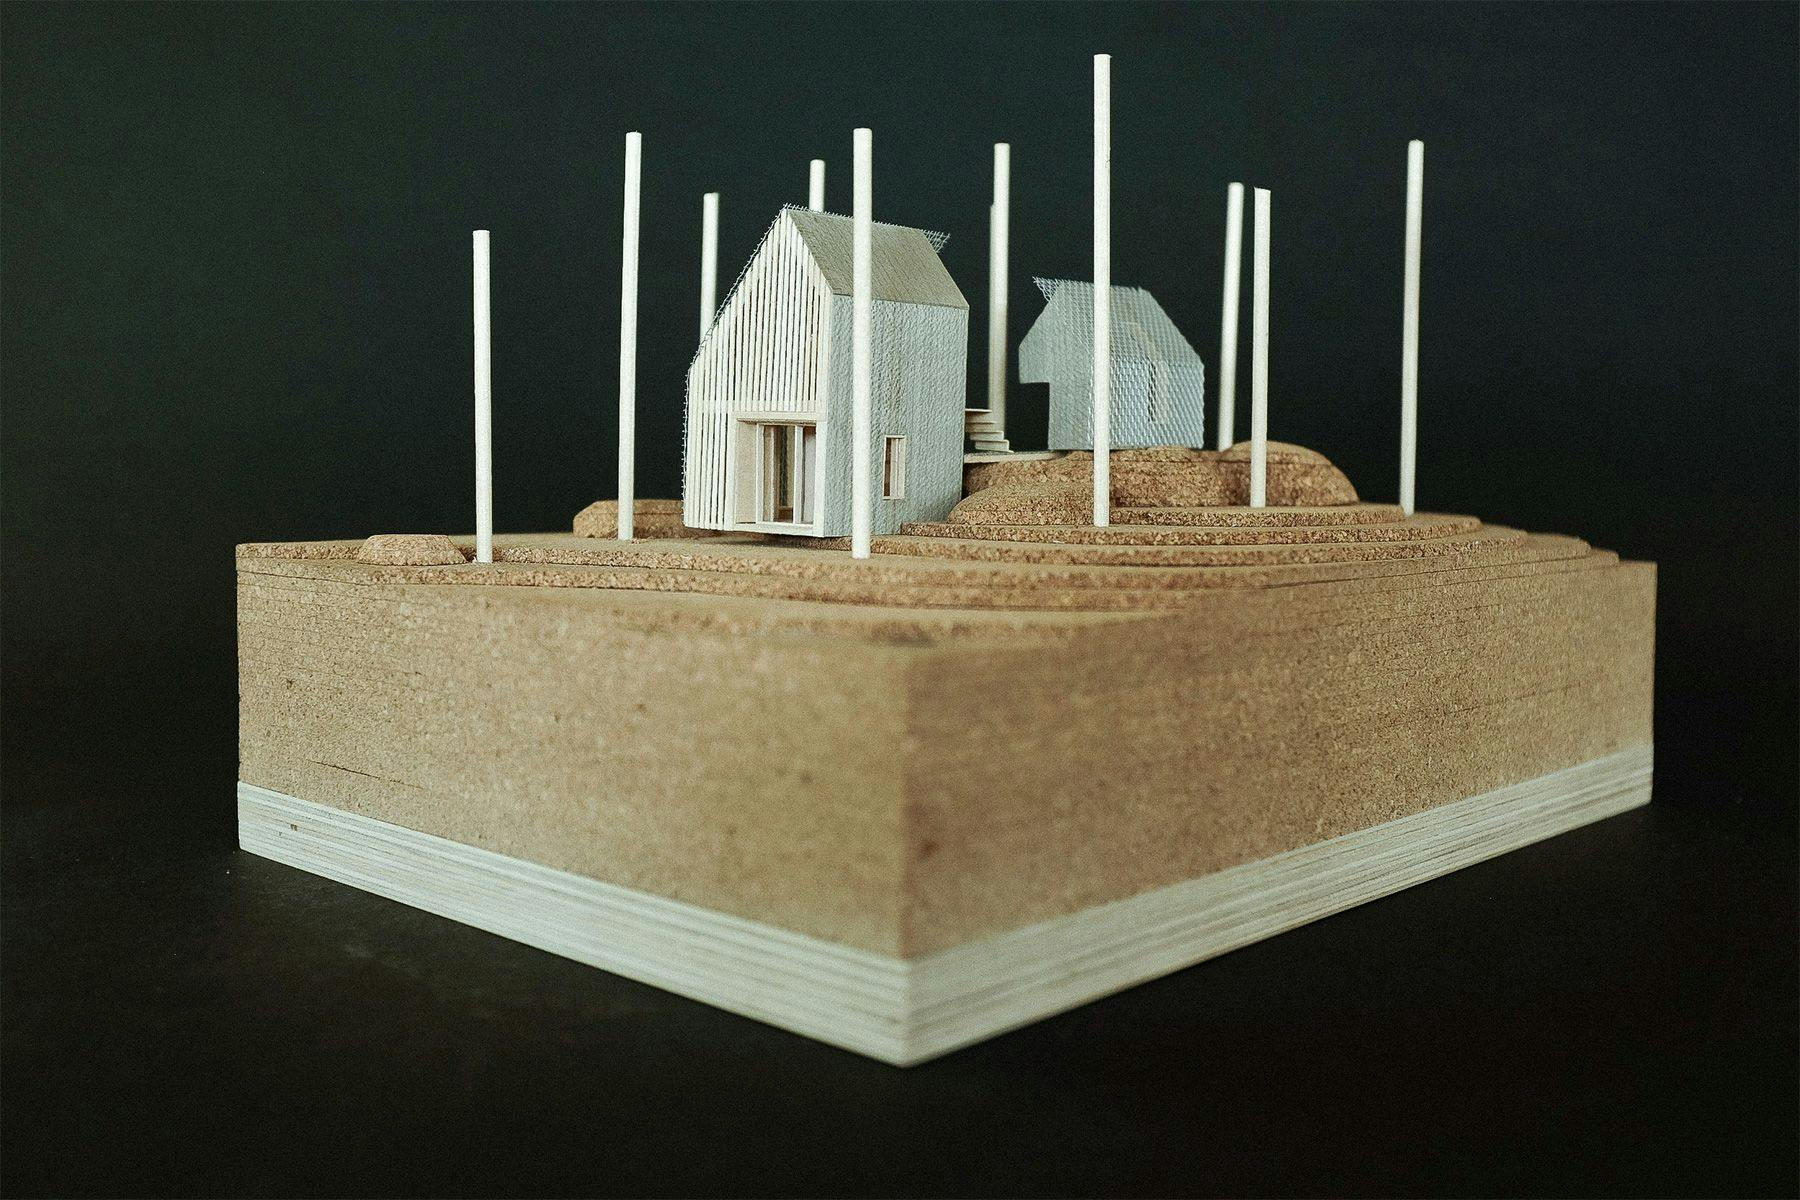 scale model of surf ranch dwelling by john fache